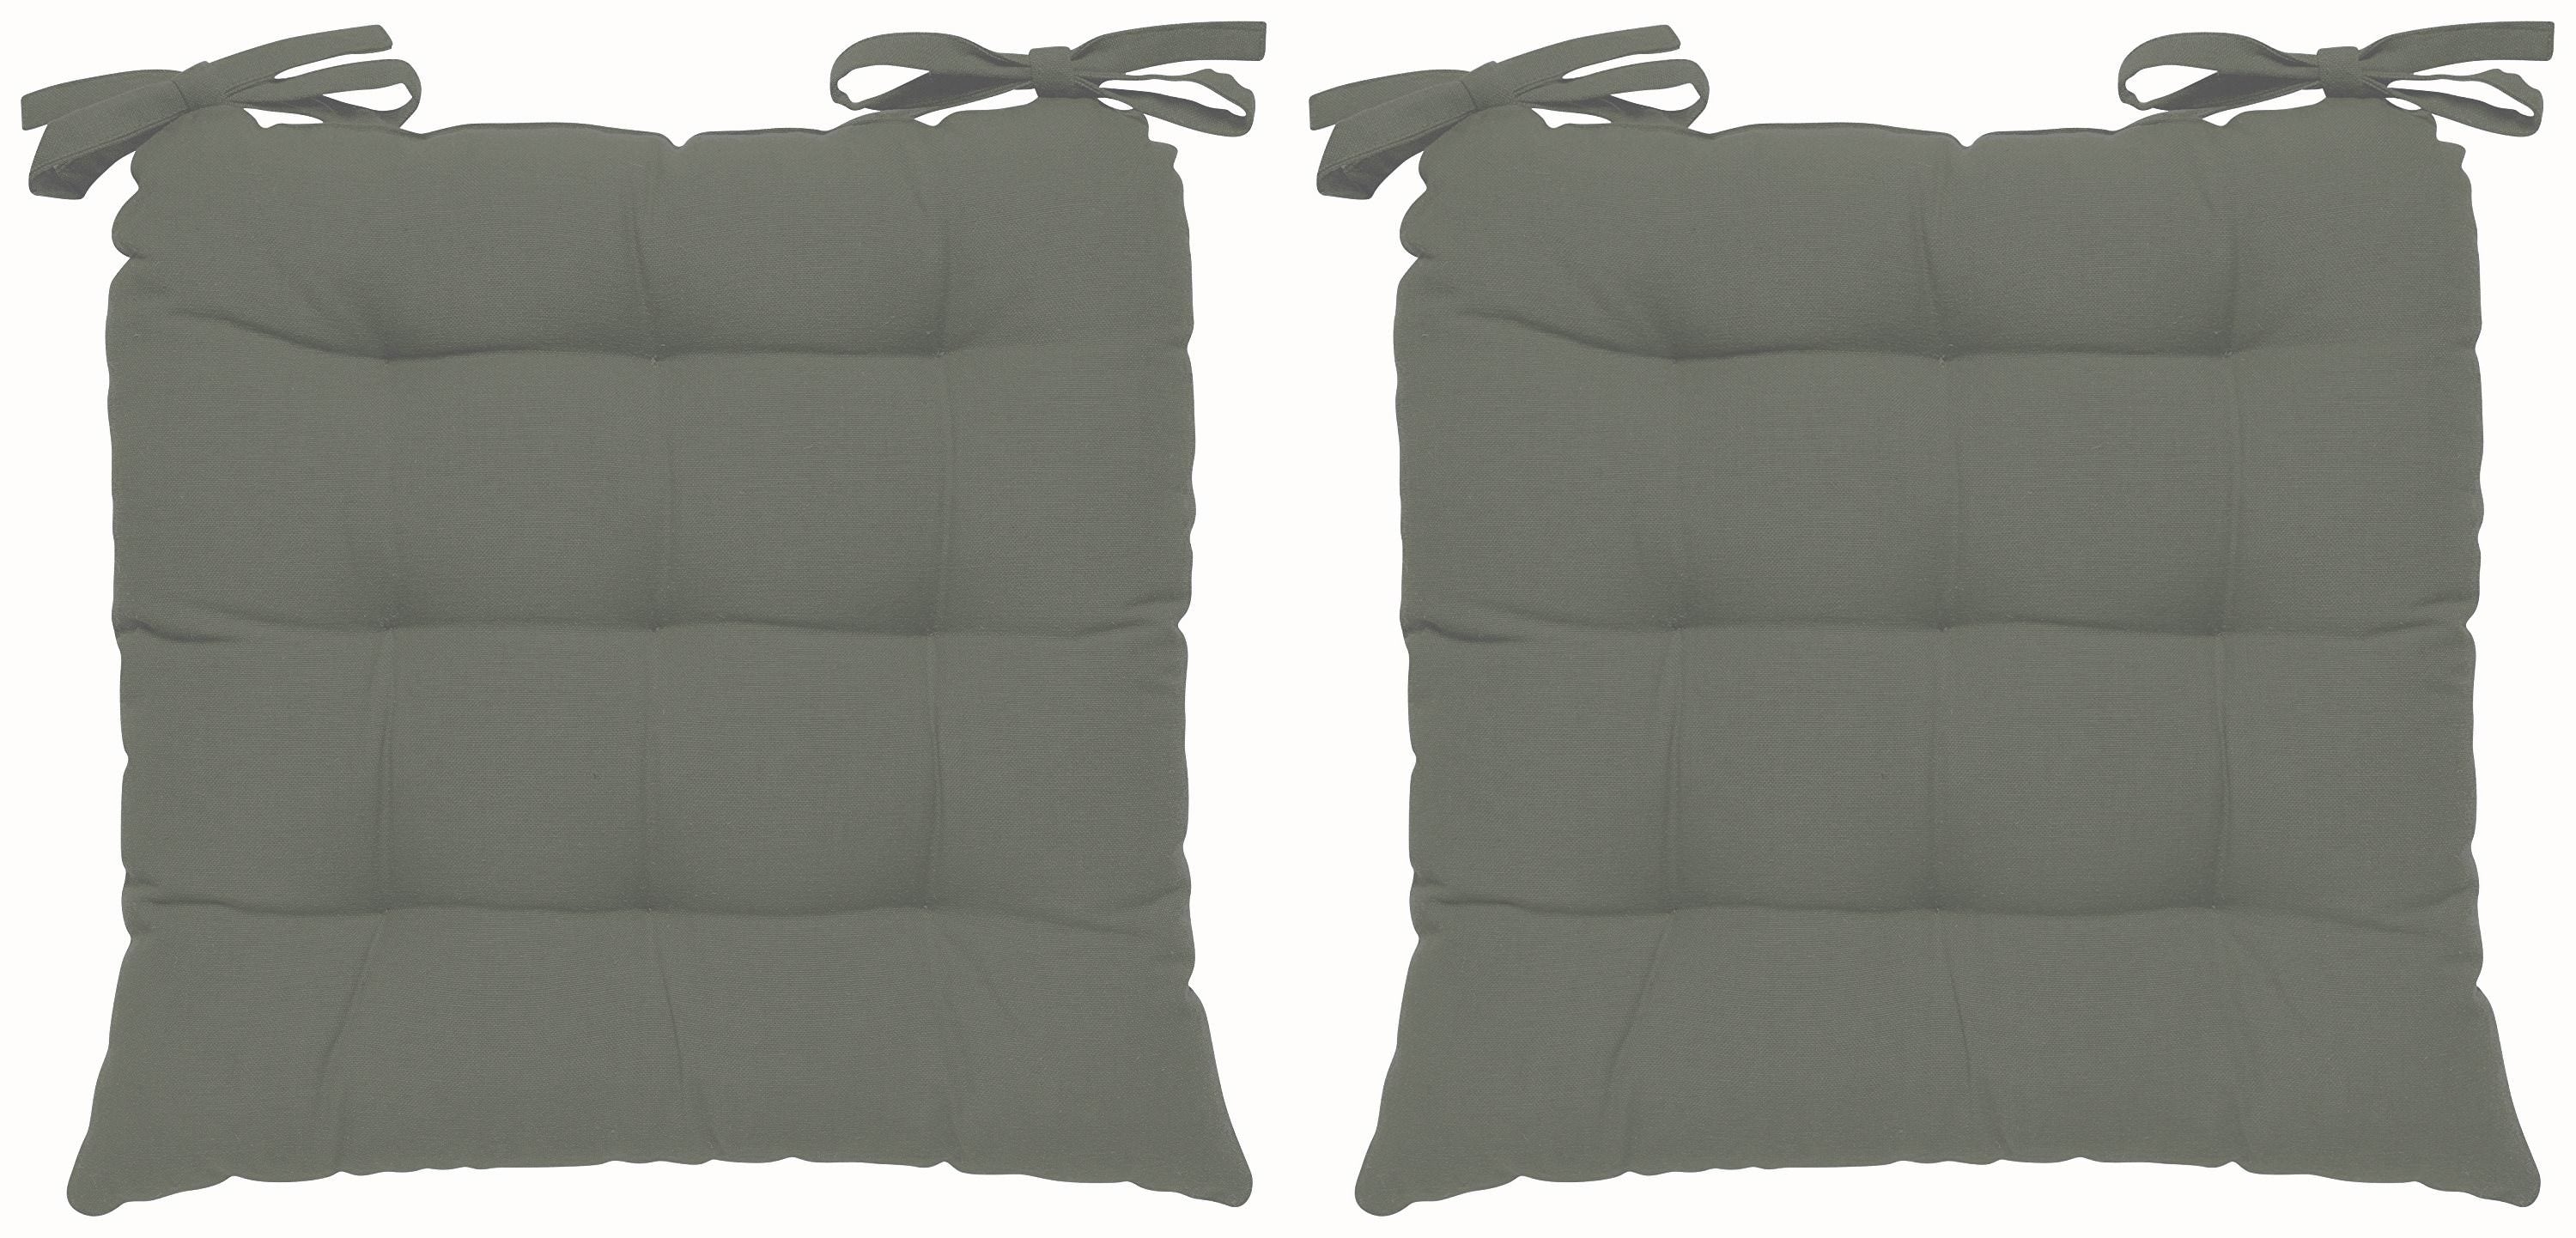 Encasa Homes Chairpad 40x40cm (2pc pack) - Dyed Cotton Canvas Filled Cushion - Gris